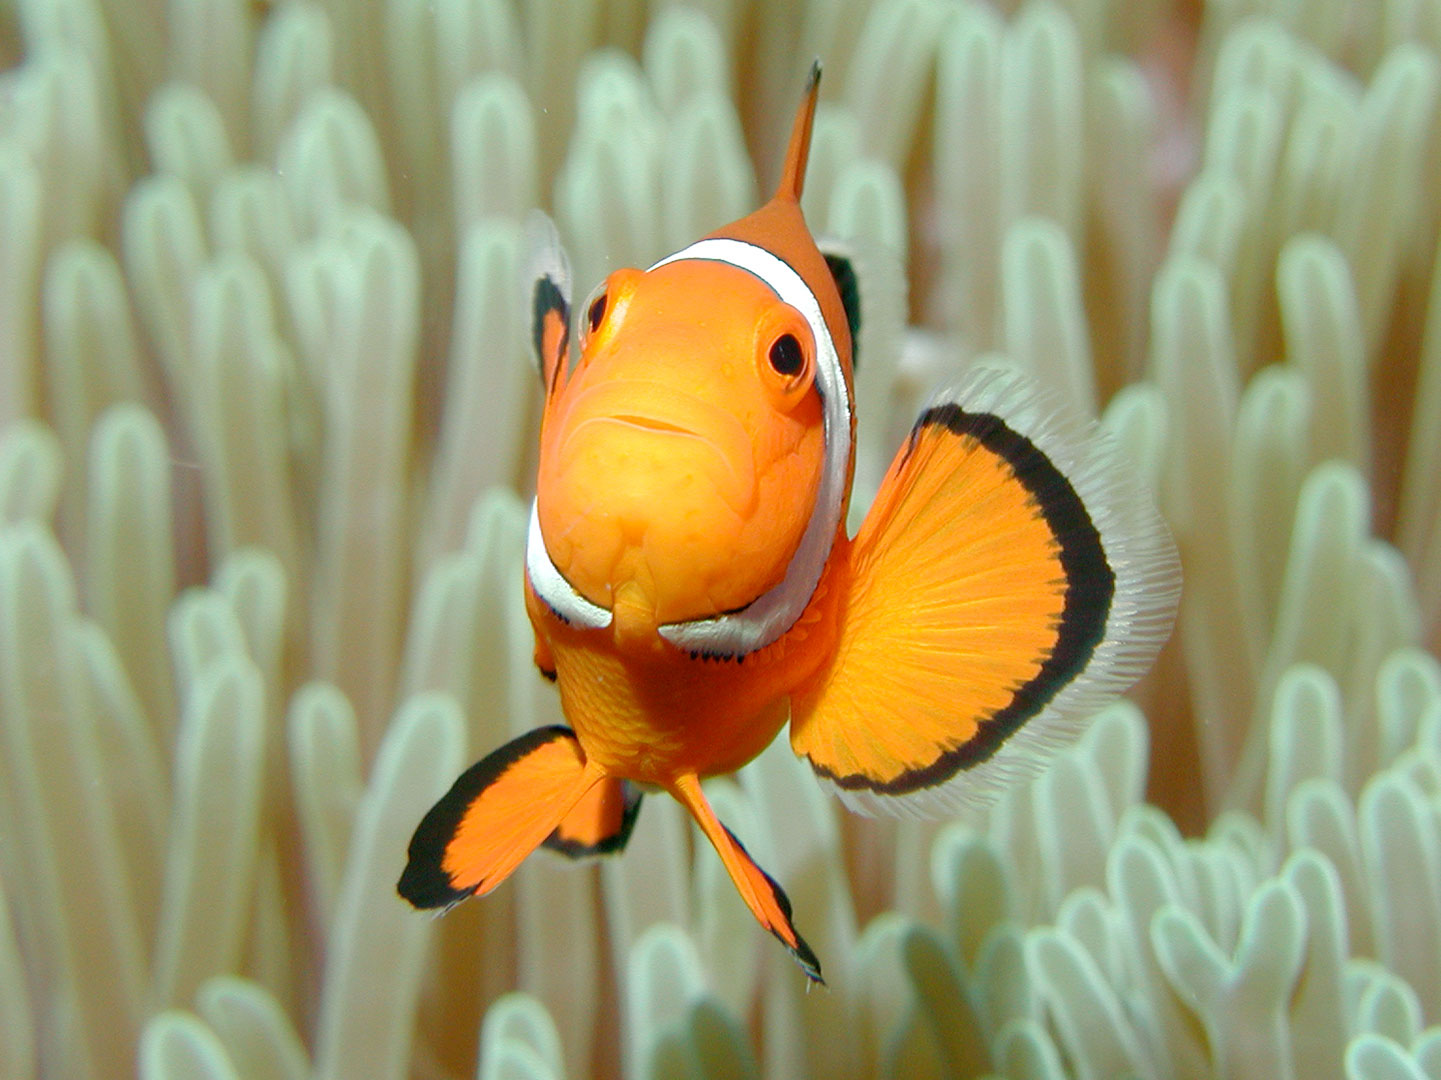 A bright orange clownfish